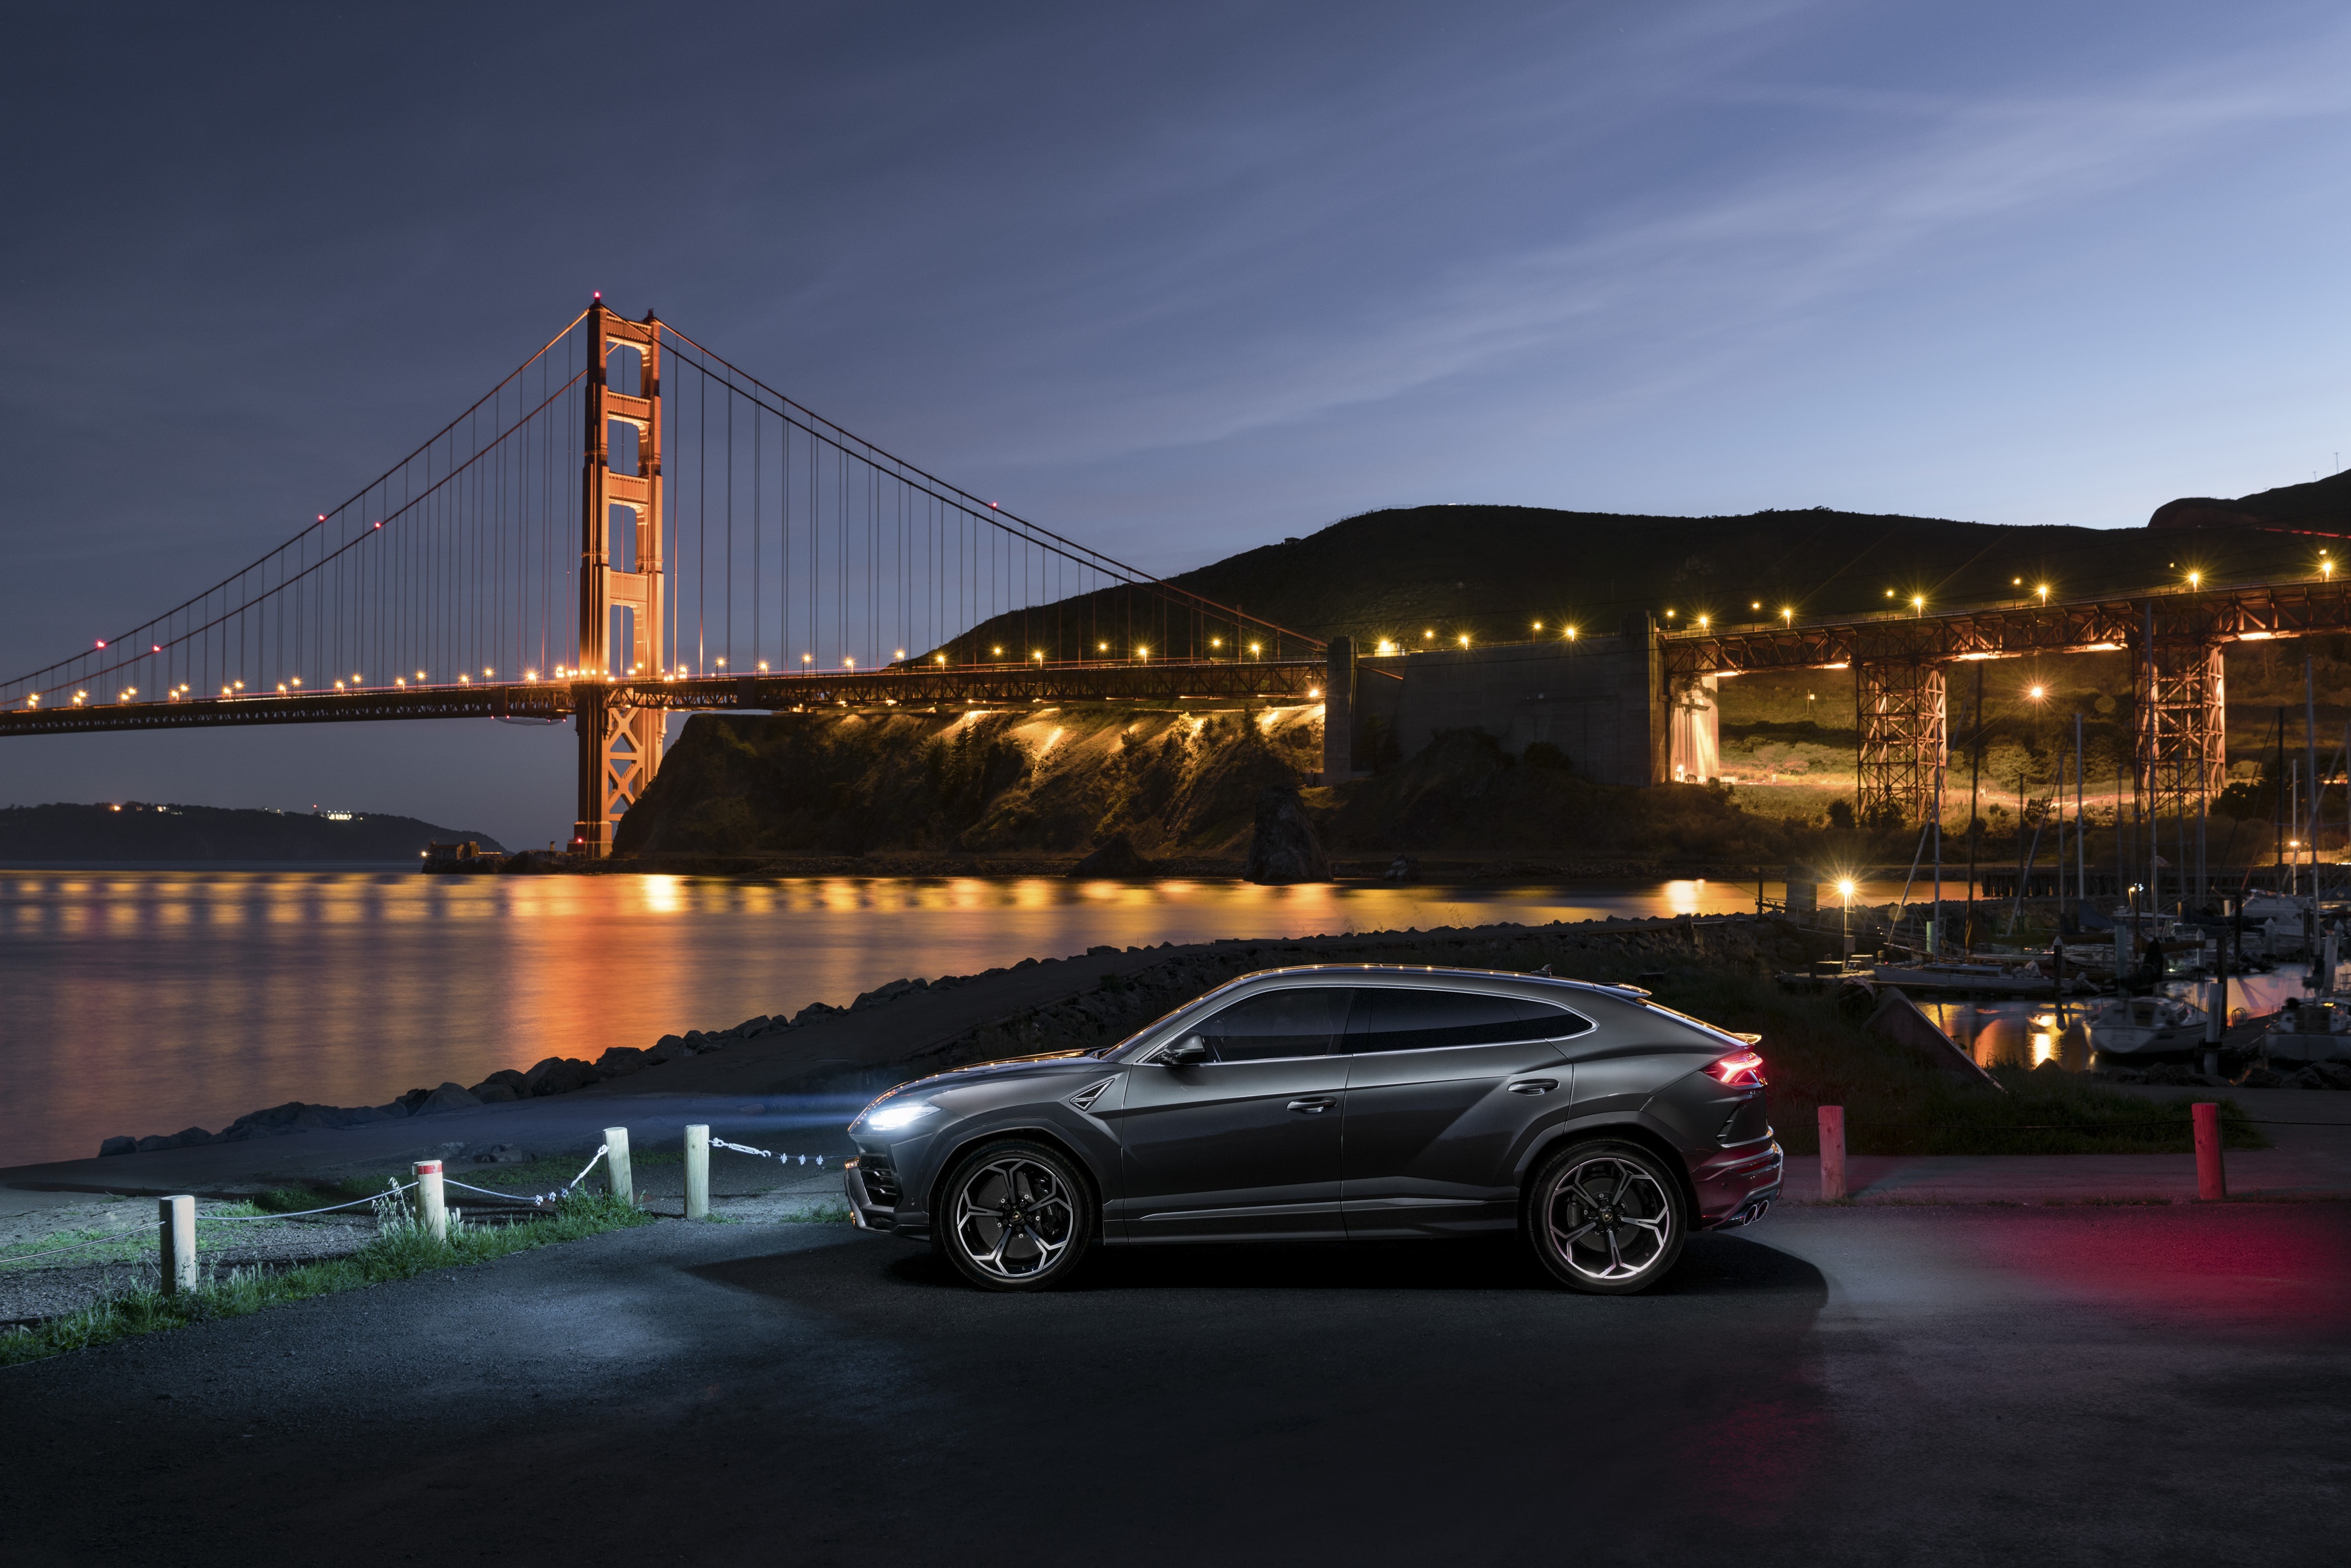 Lamborghini Golden Gate Car Bridge Silver Car Suv Luxury Car Night 3543x2363